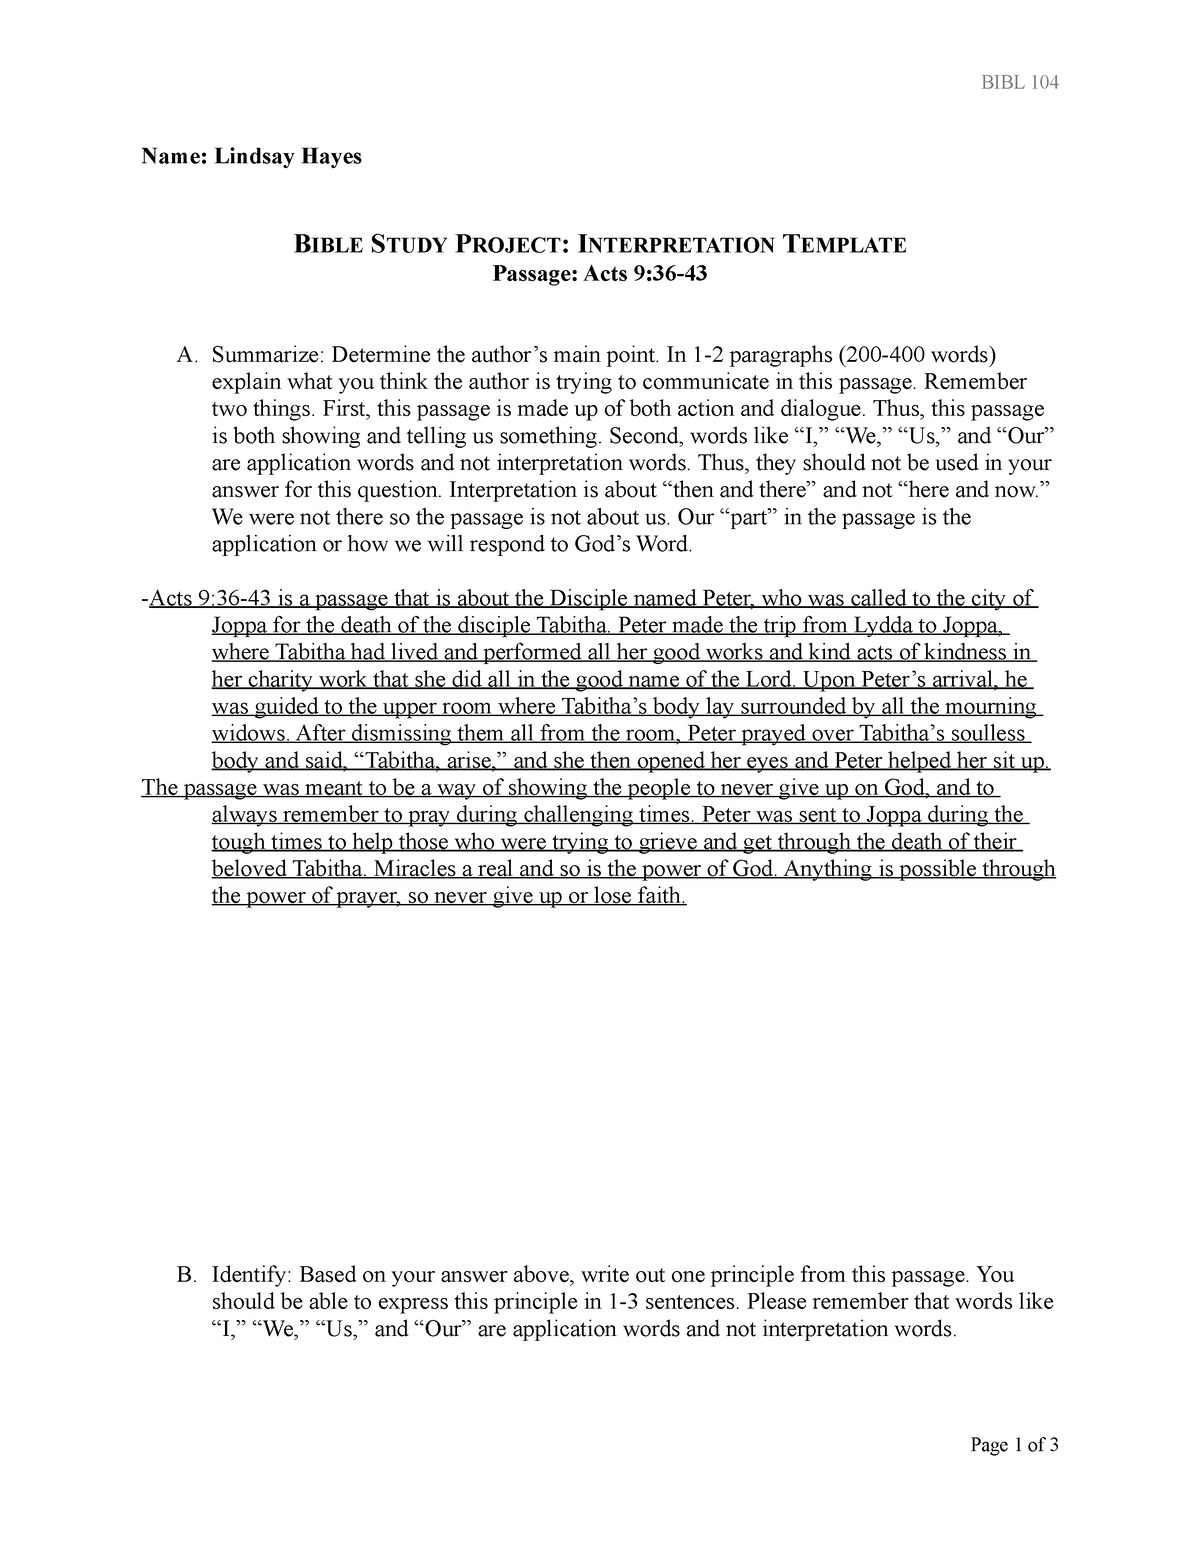 bible study project interpretation assignment